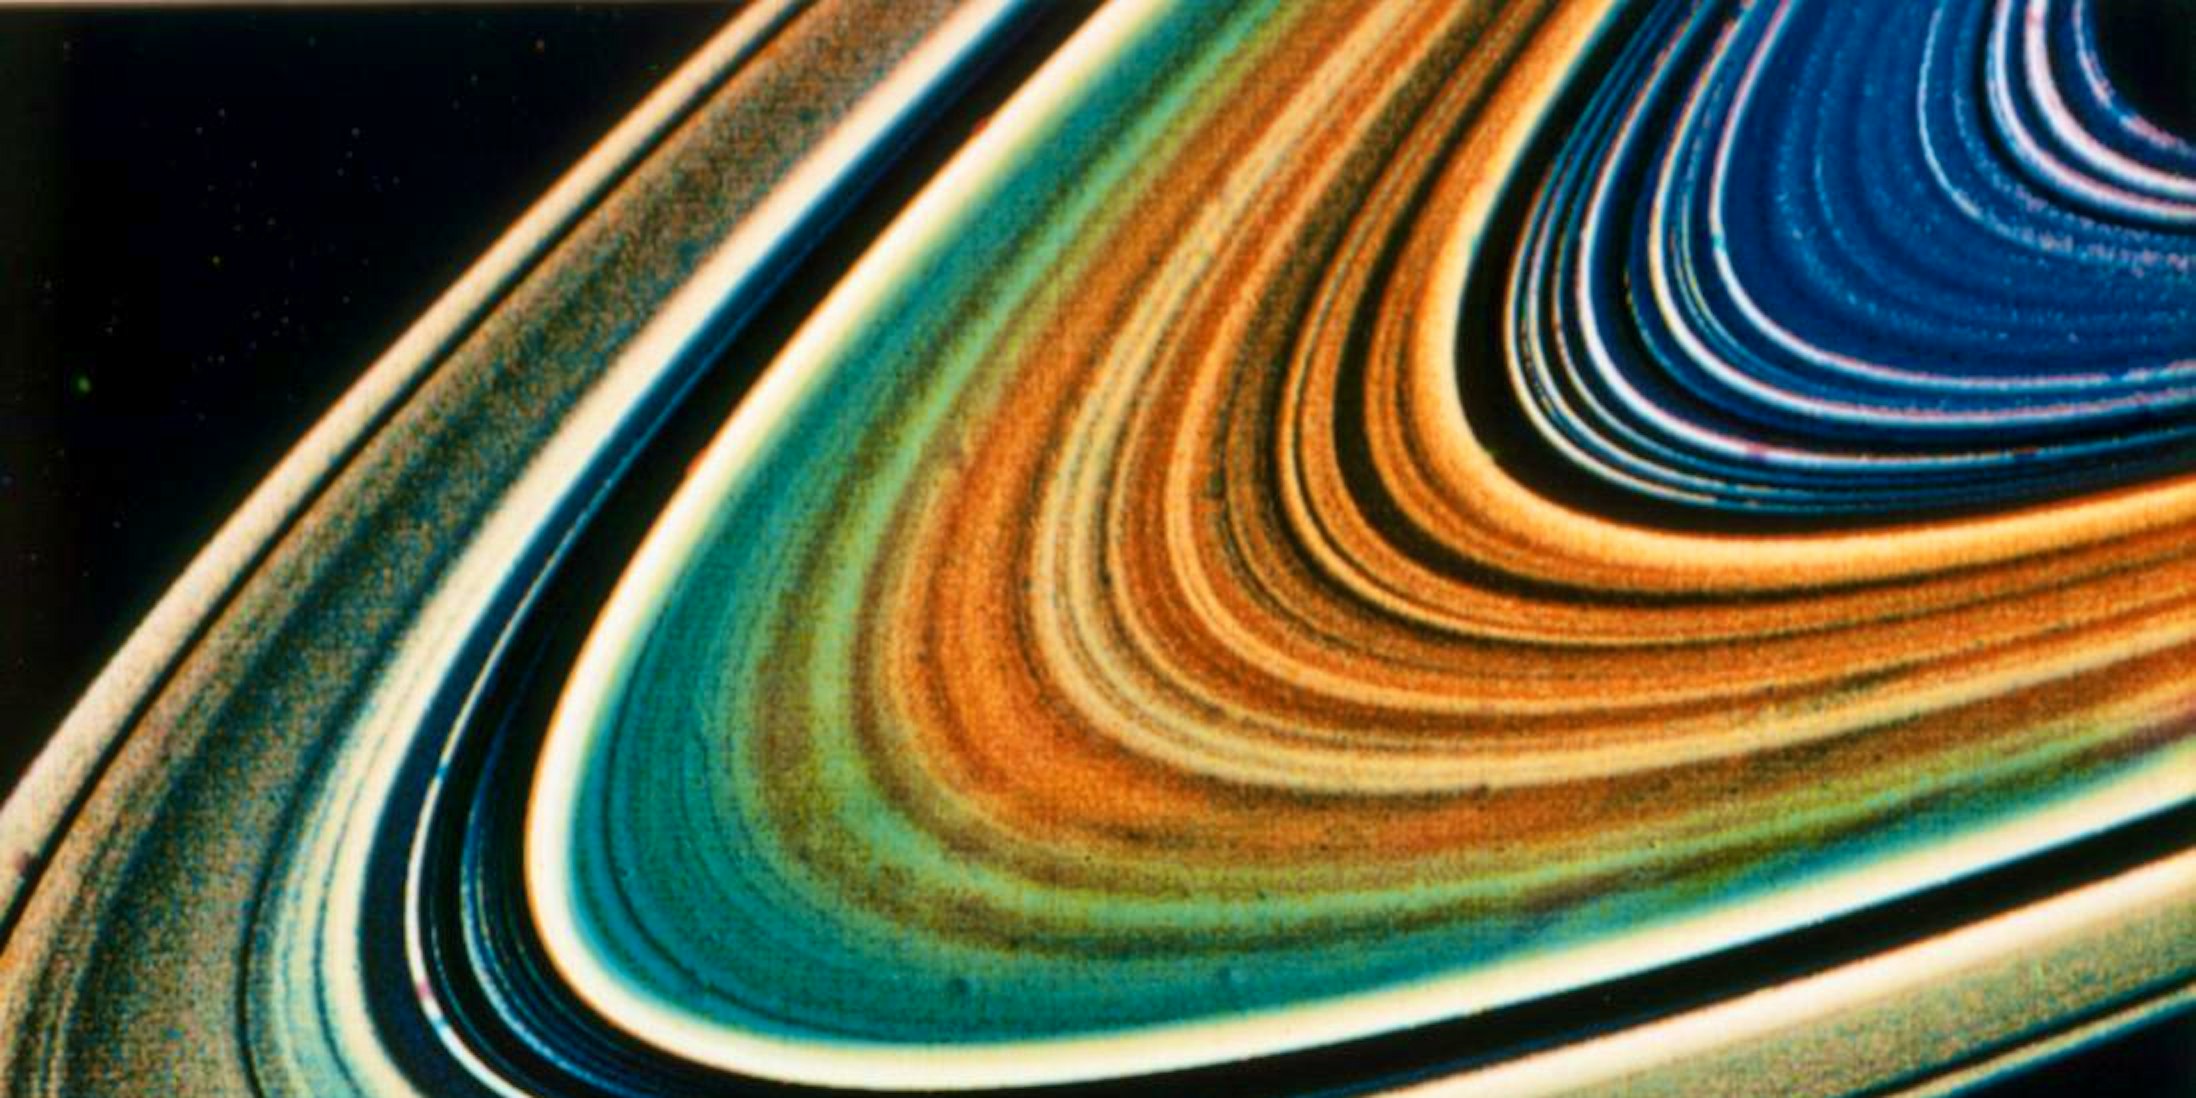 New findings on Saturn's rings.